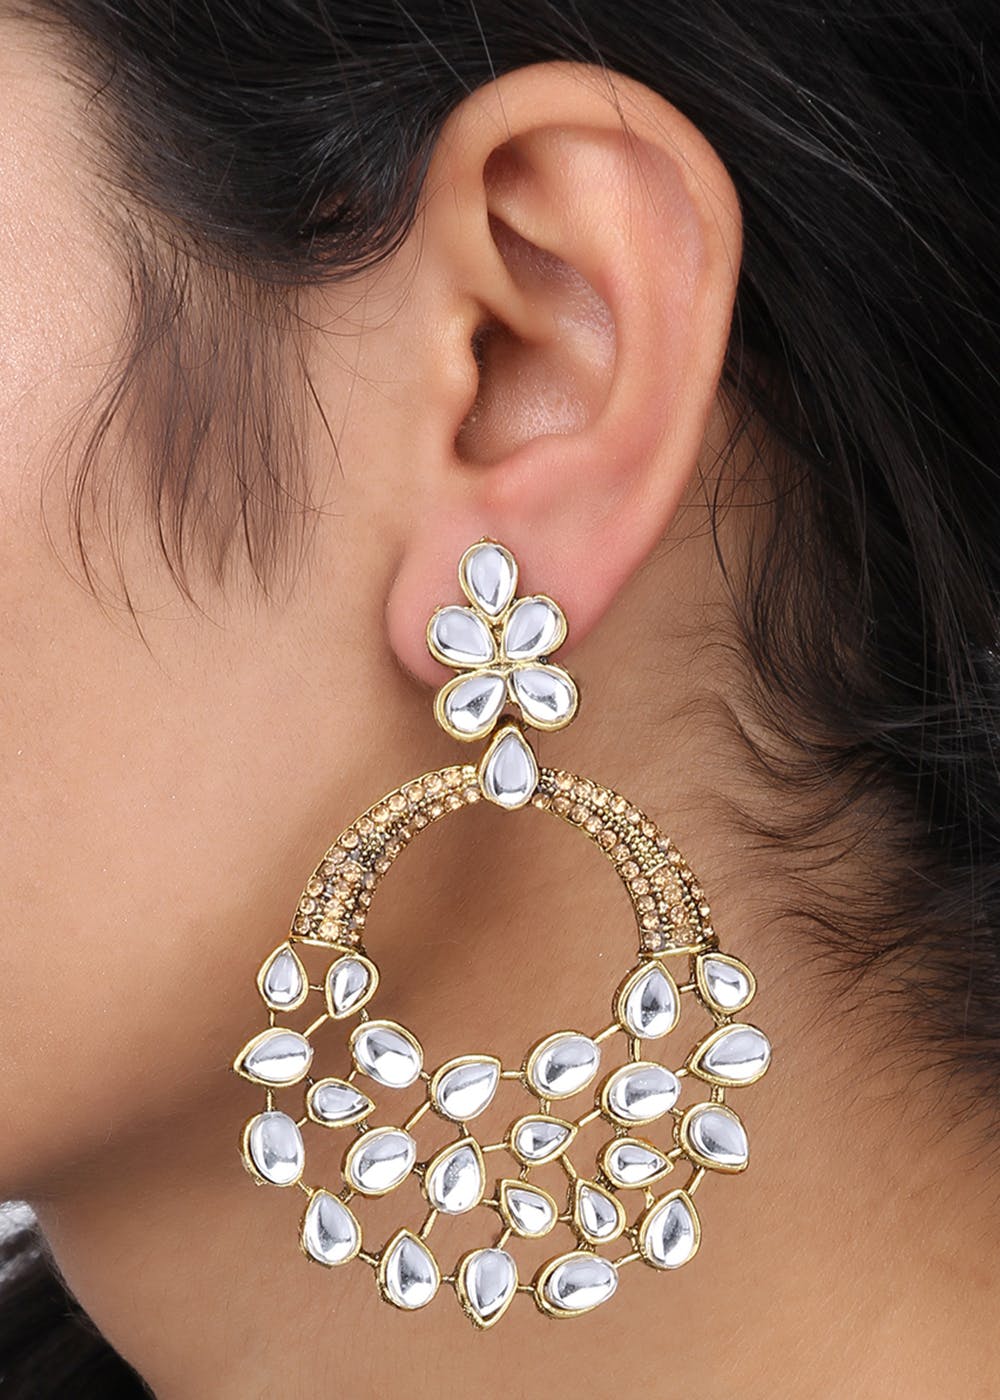 Get Golden Floral Kundan Earrings at ₹ 449 | LBB Shop